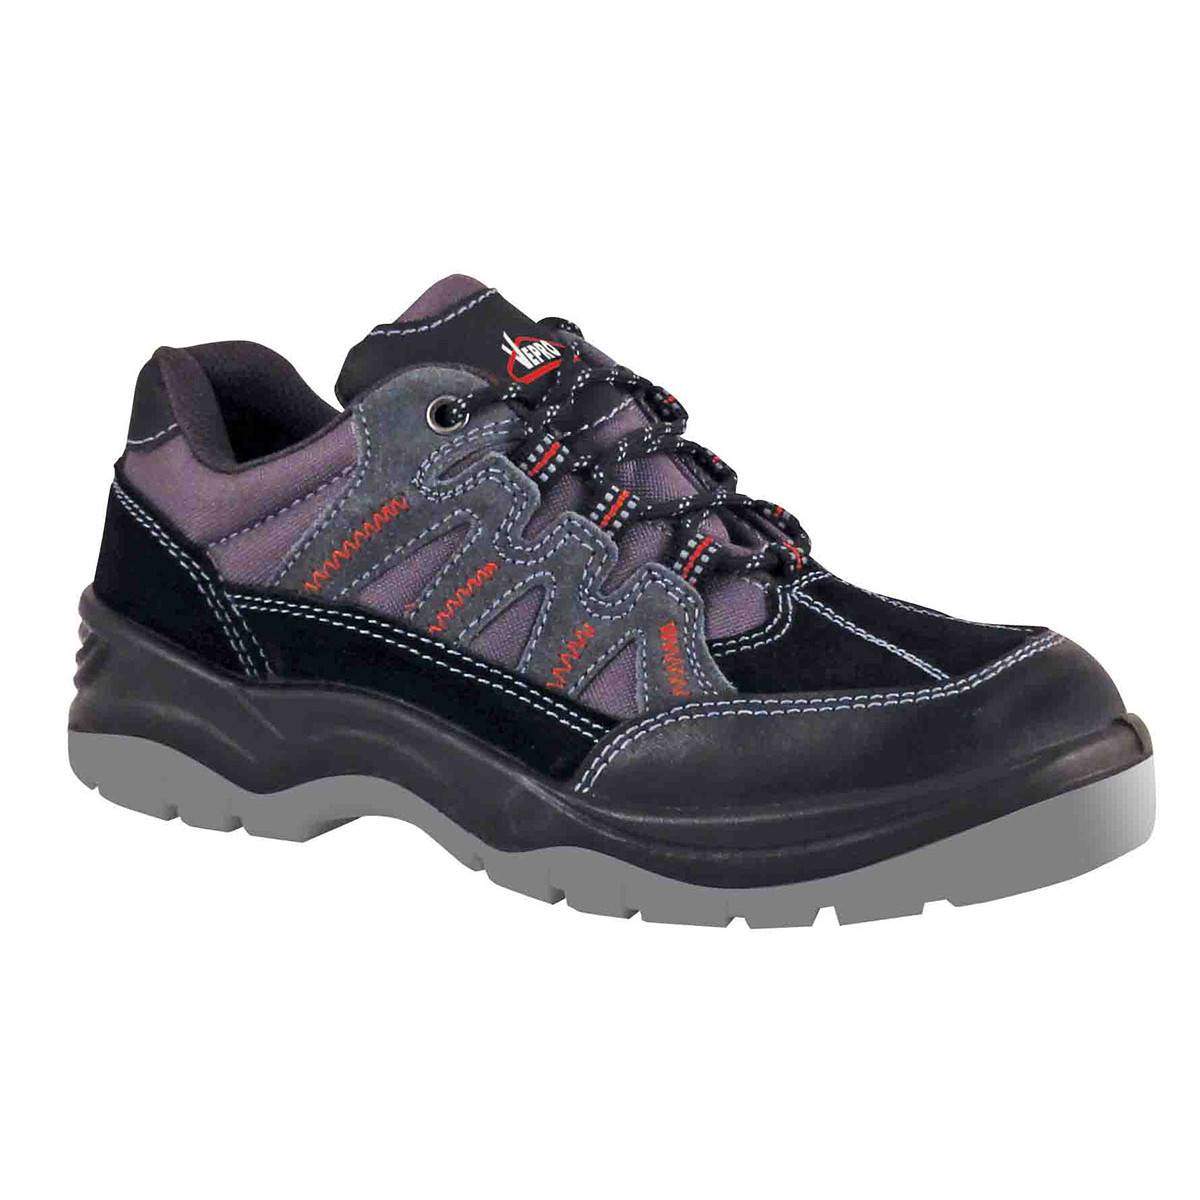 SPA safety shoes size 42, grey black